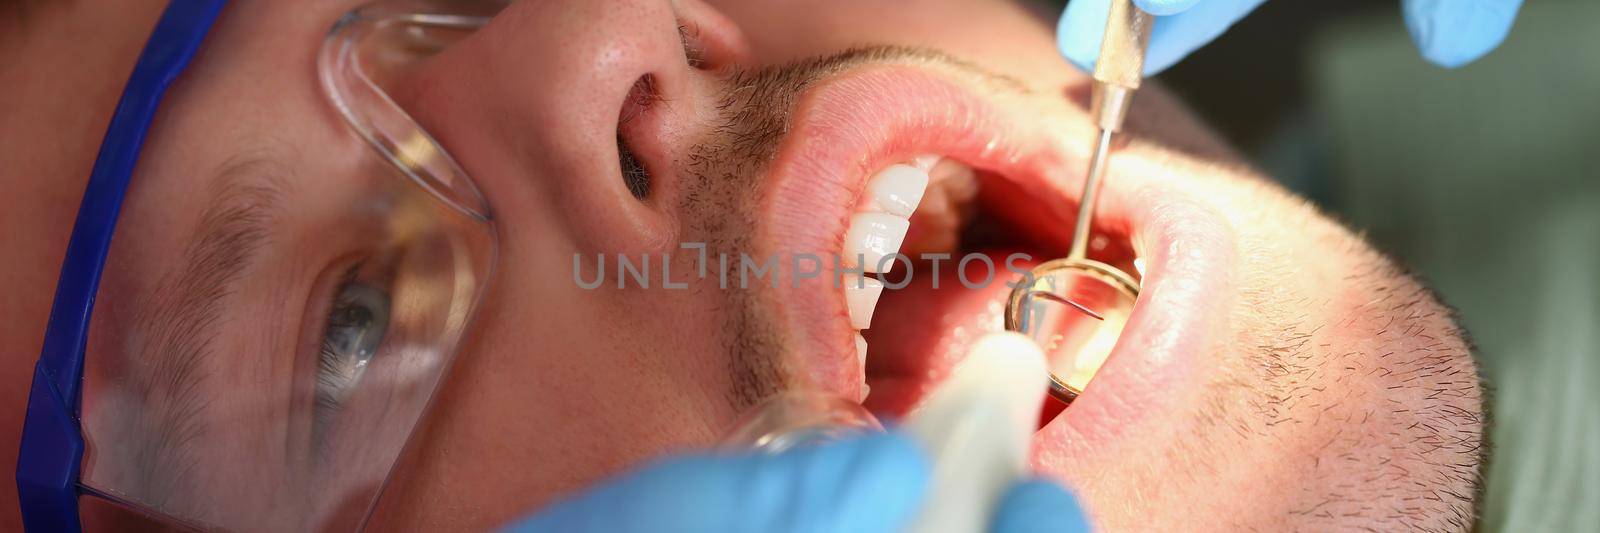 A man treats teeth, a patient's face close-up. Dentist tools, dental clinic, teeth whitening, treatment procedures